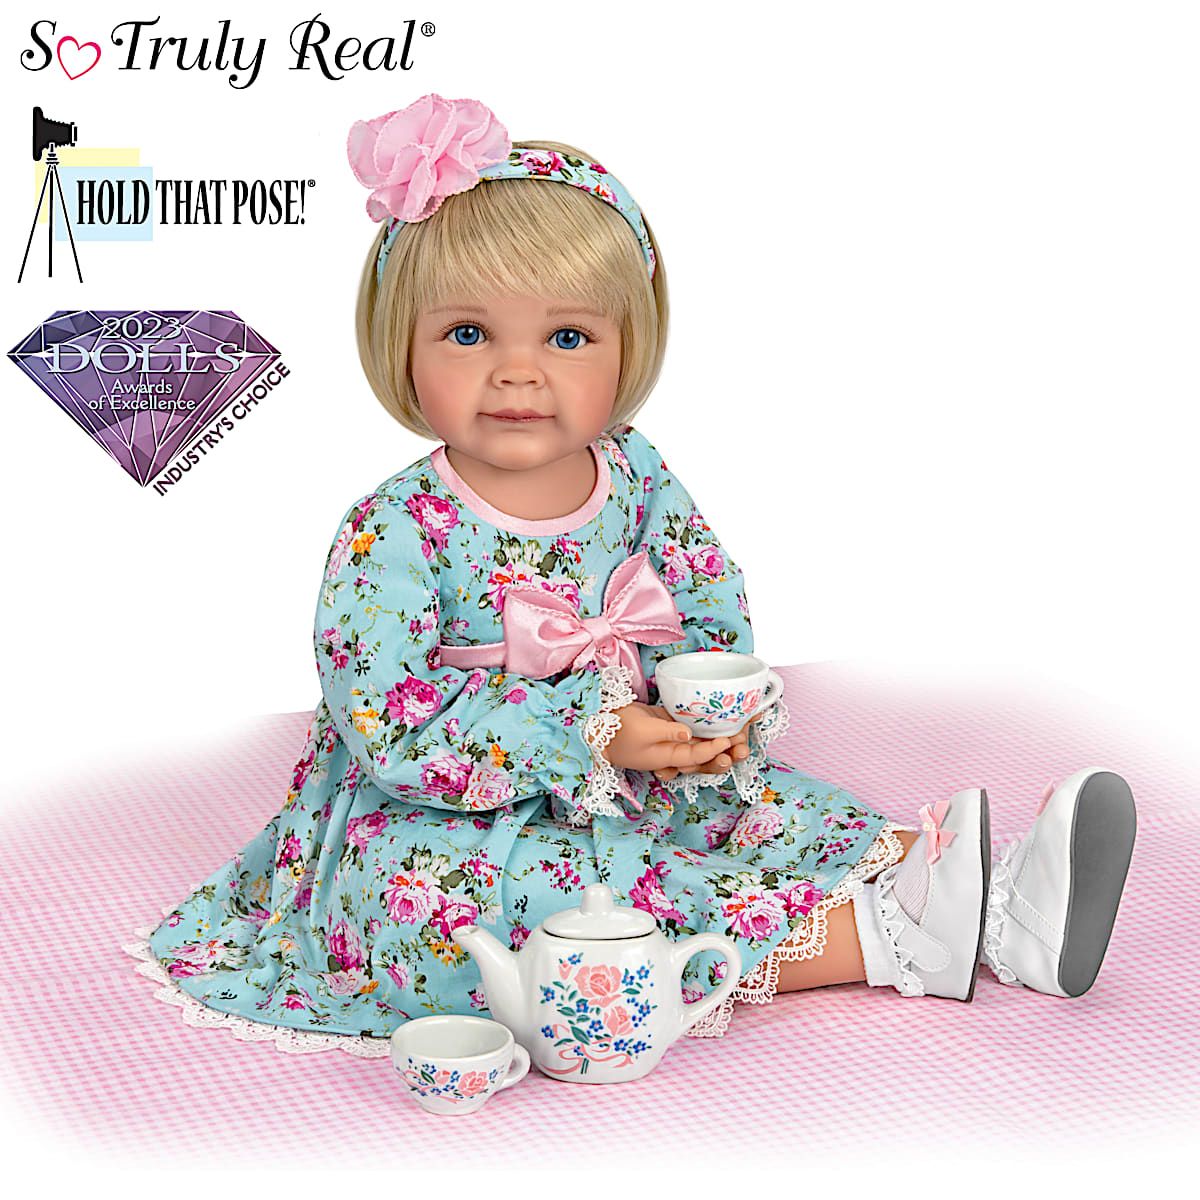 Baby Doll Pose Holding Her Lifeless Stock Photo 1151631185 | Shutterstock